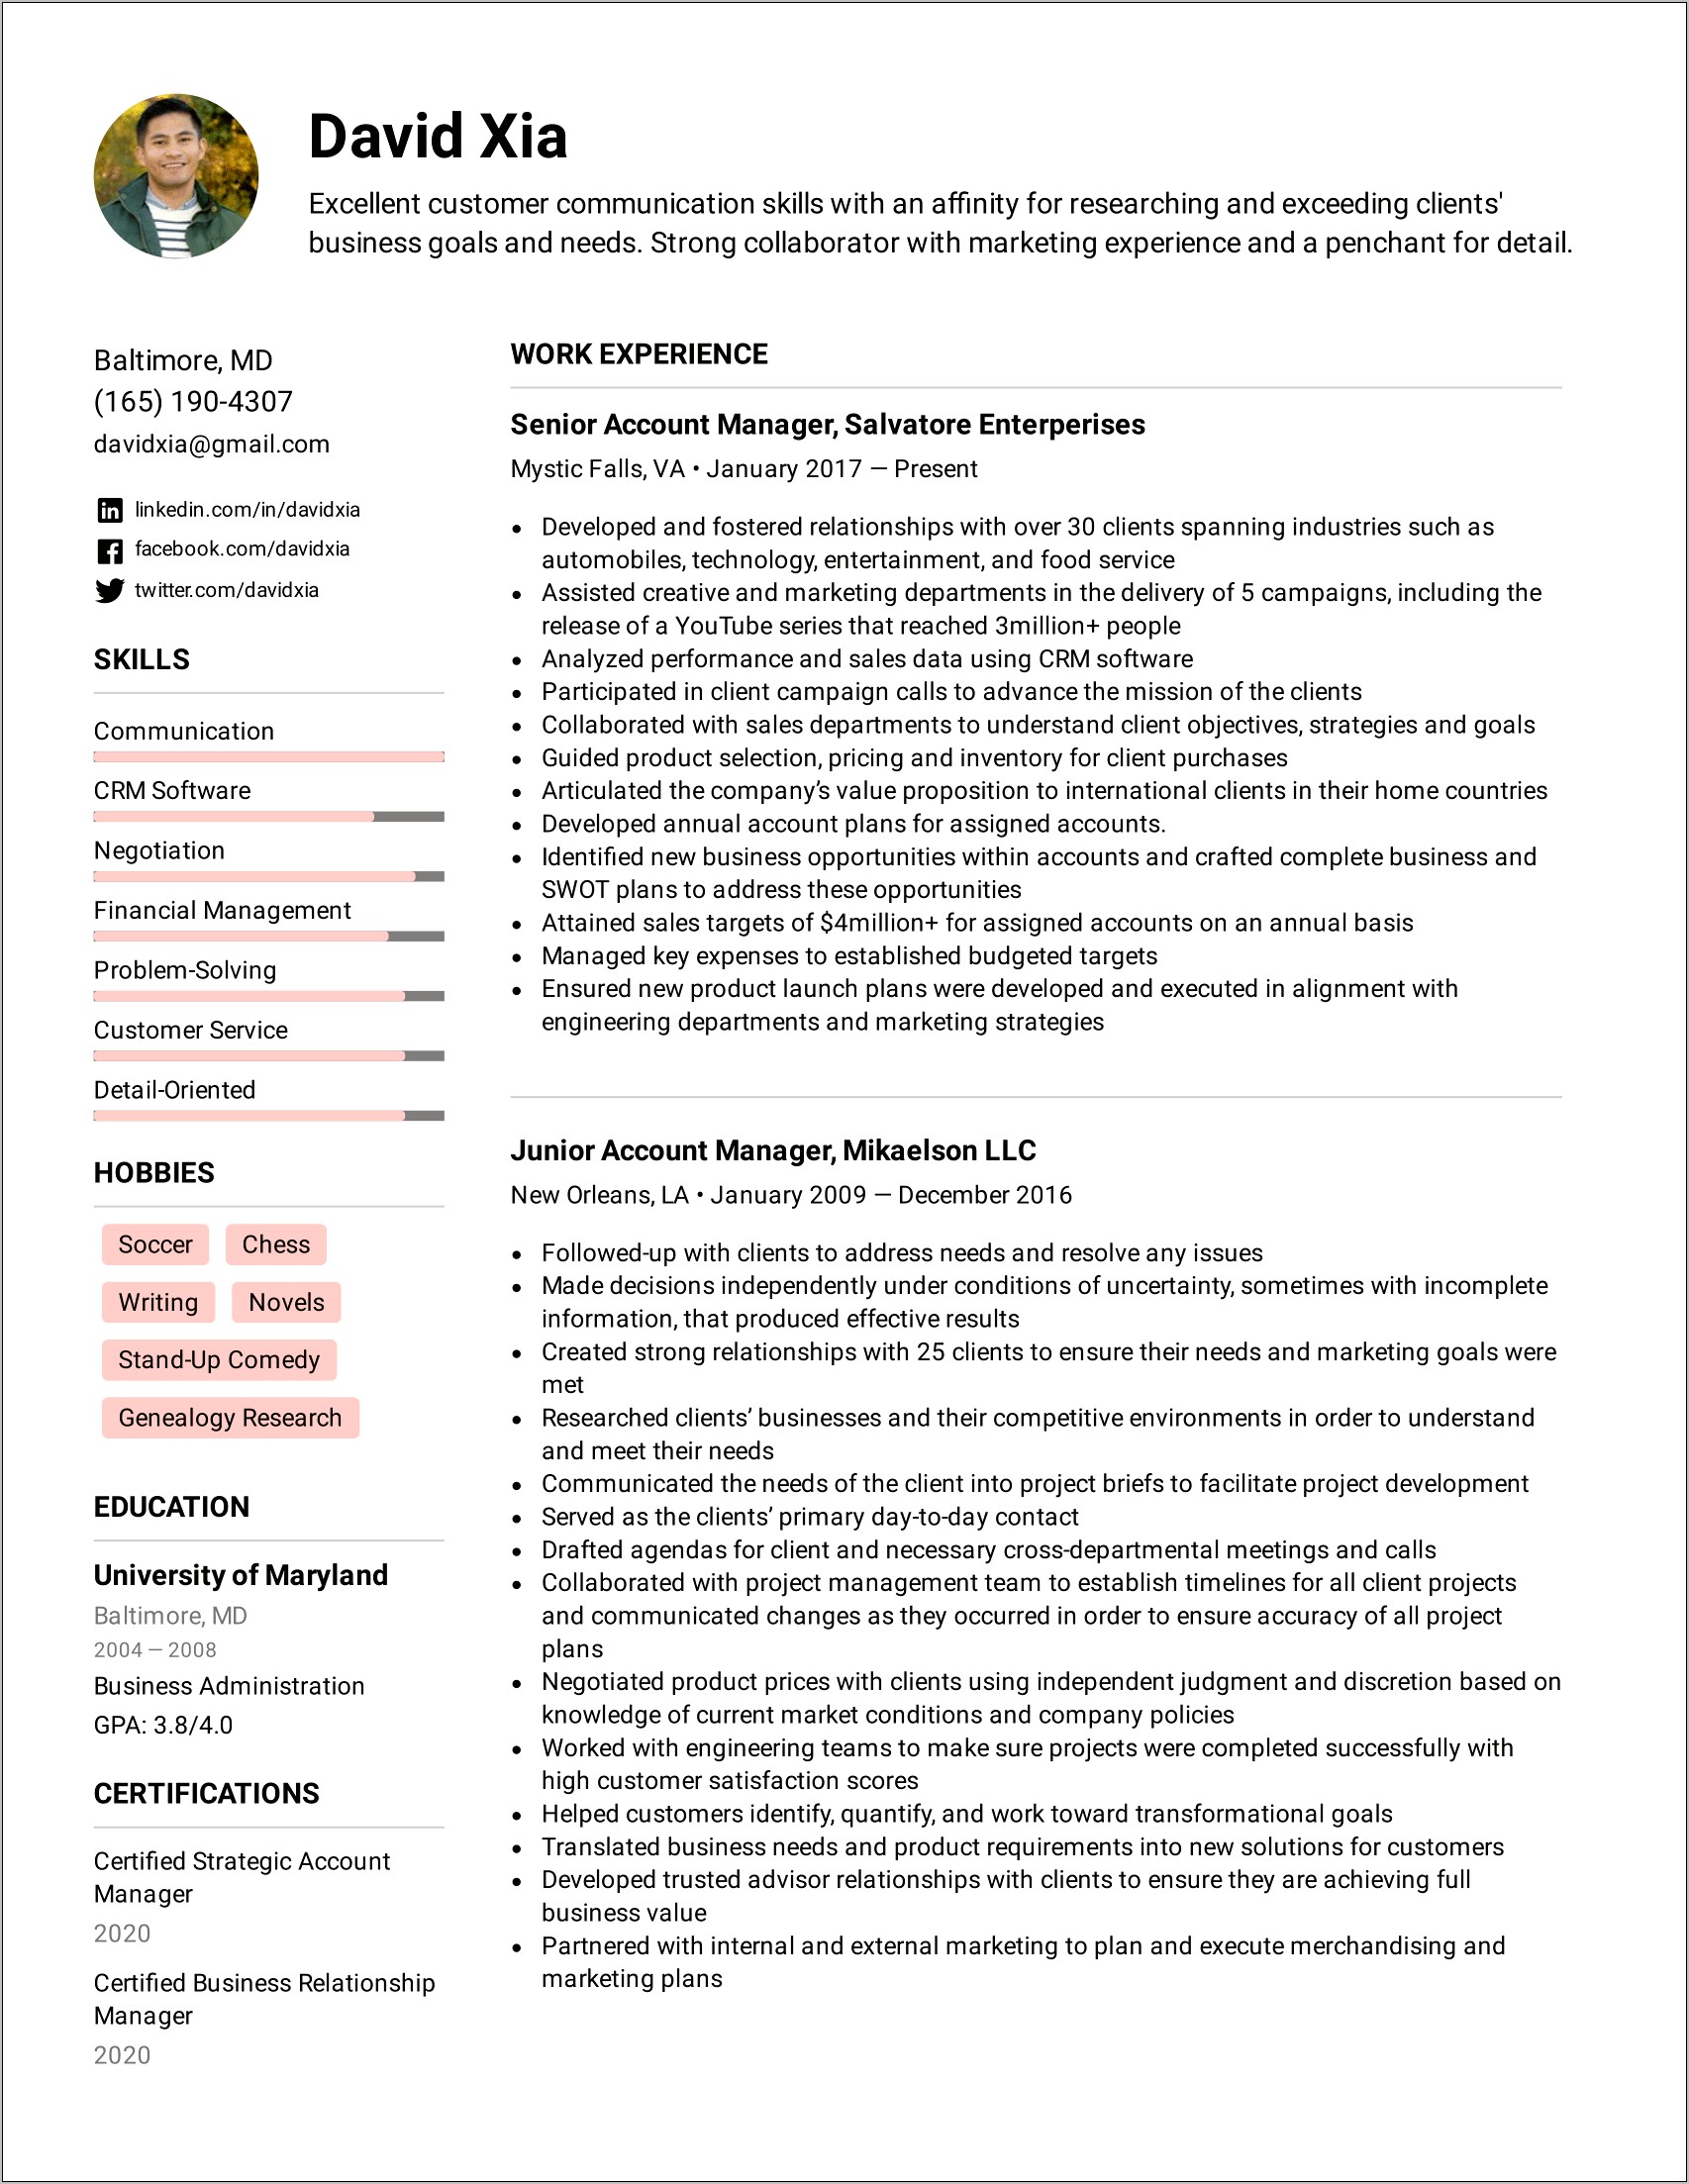 Interior Design Merchandising Manager Summary Resume